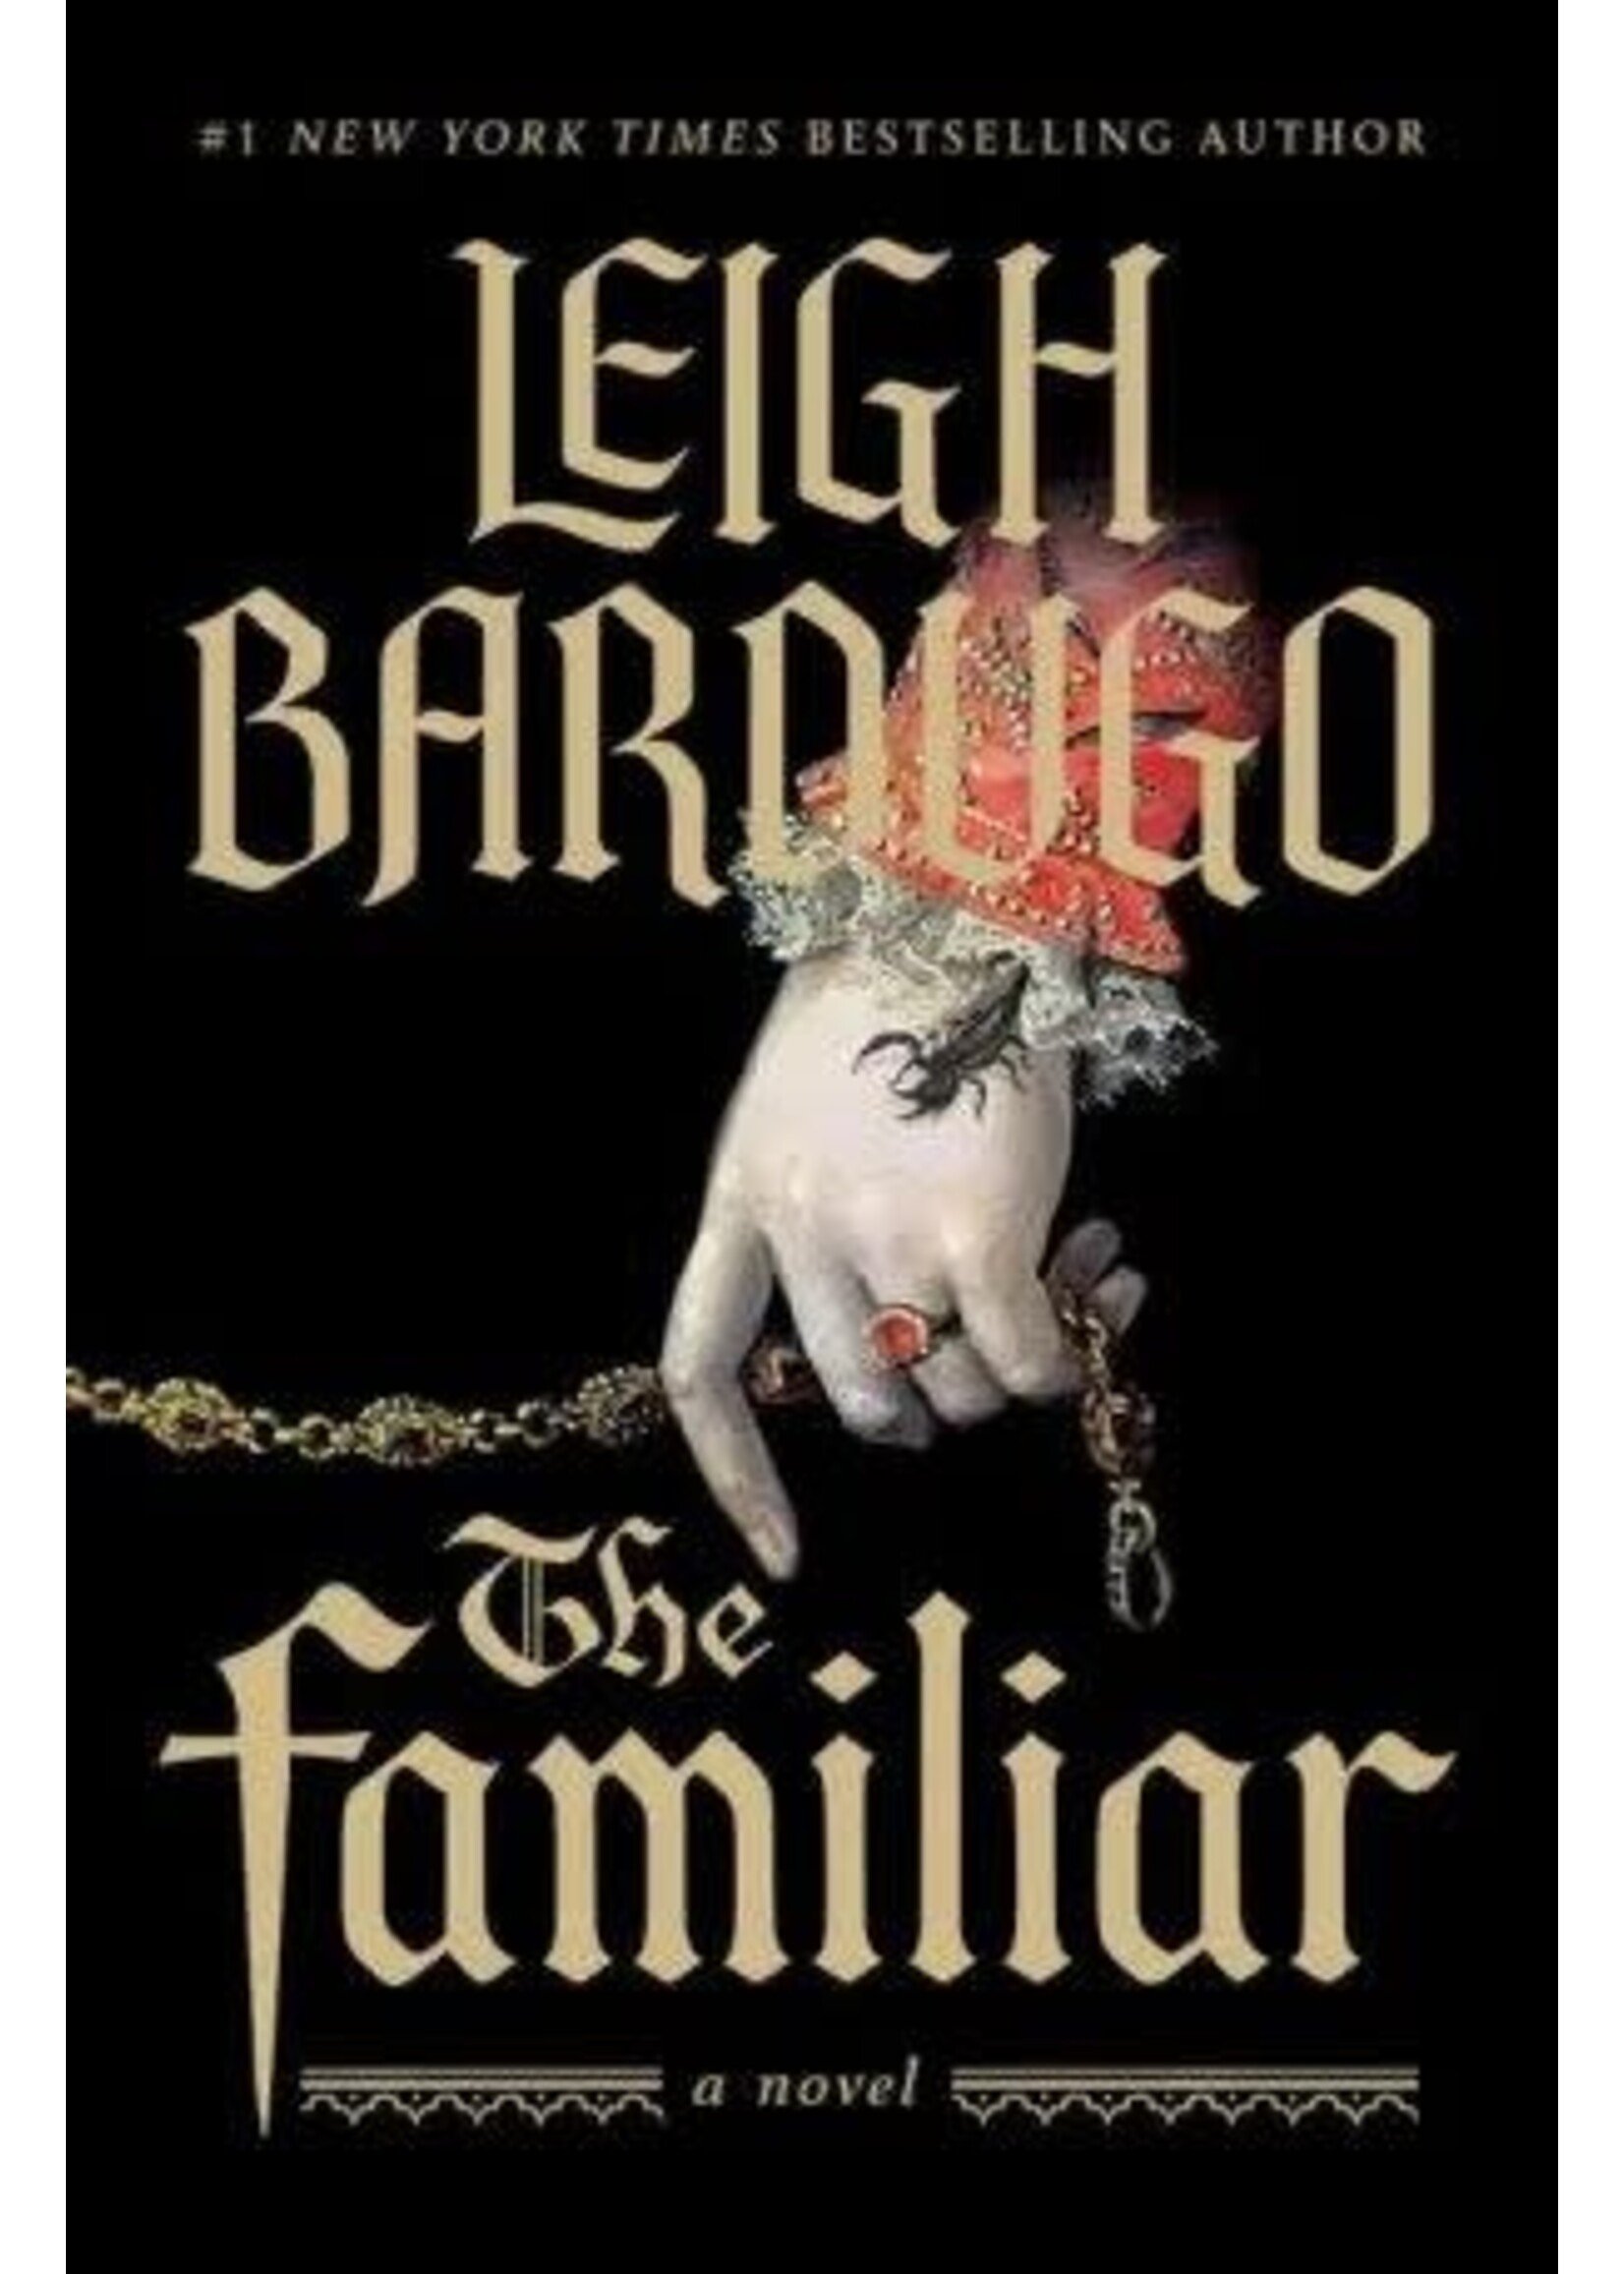 The Familiar by Leigh Bardugo